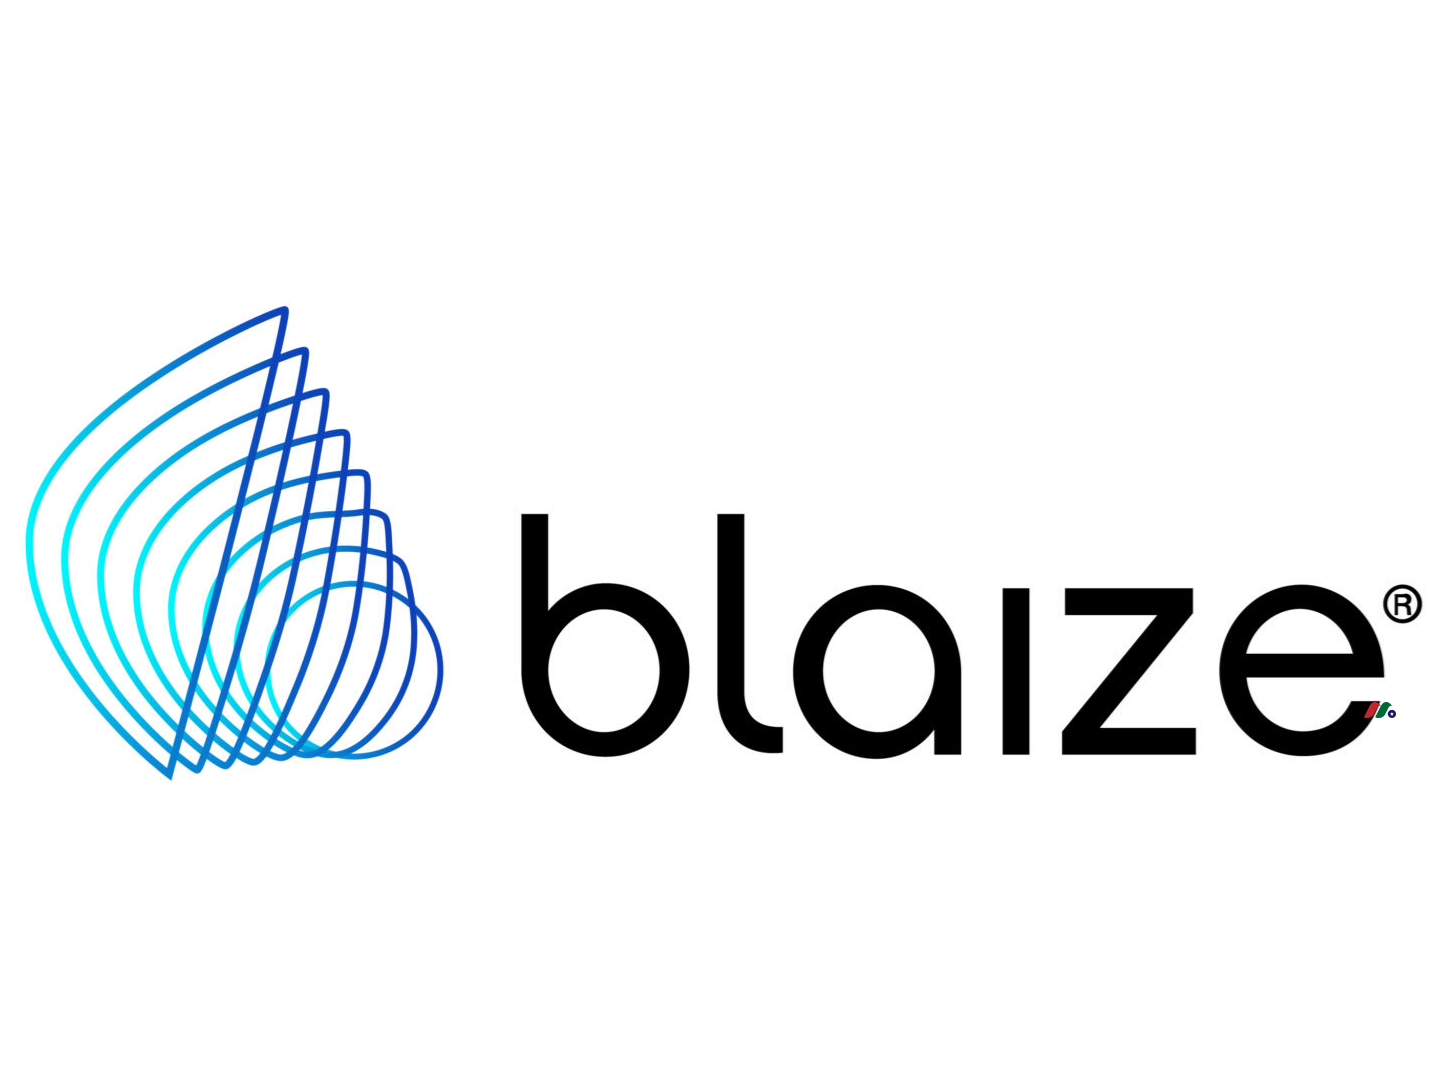 DA: 人工智能公司 Blaize 将通过与 BurTech Acquisition Corp 的业务合并上市